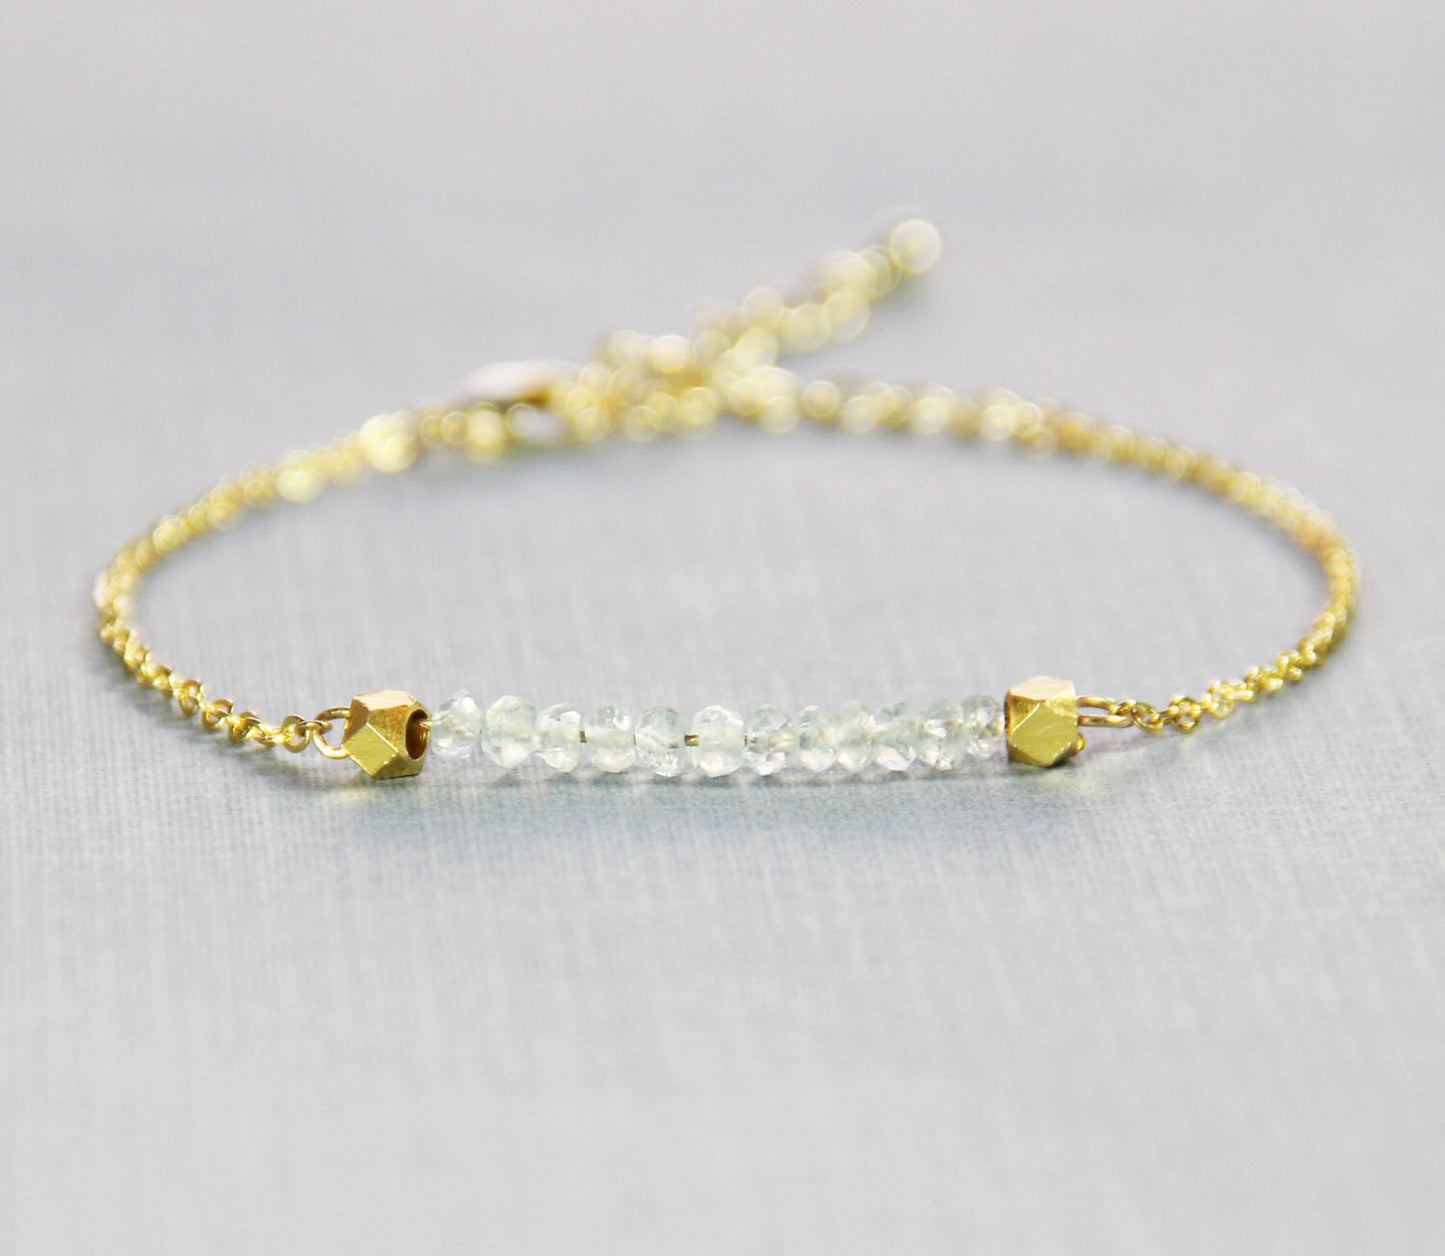 Aquamarine and Gold Bracelet - March Birthstone Bracelet - Aquamarine Bracelet